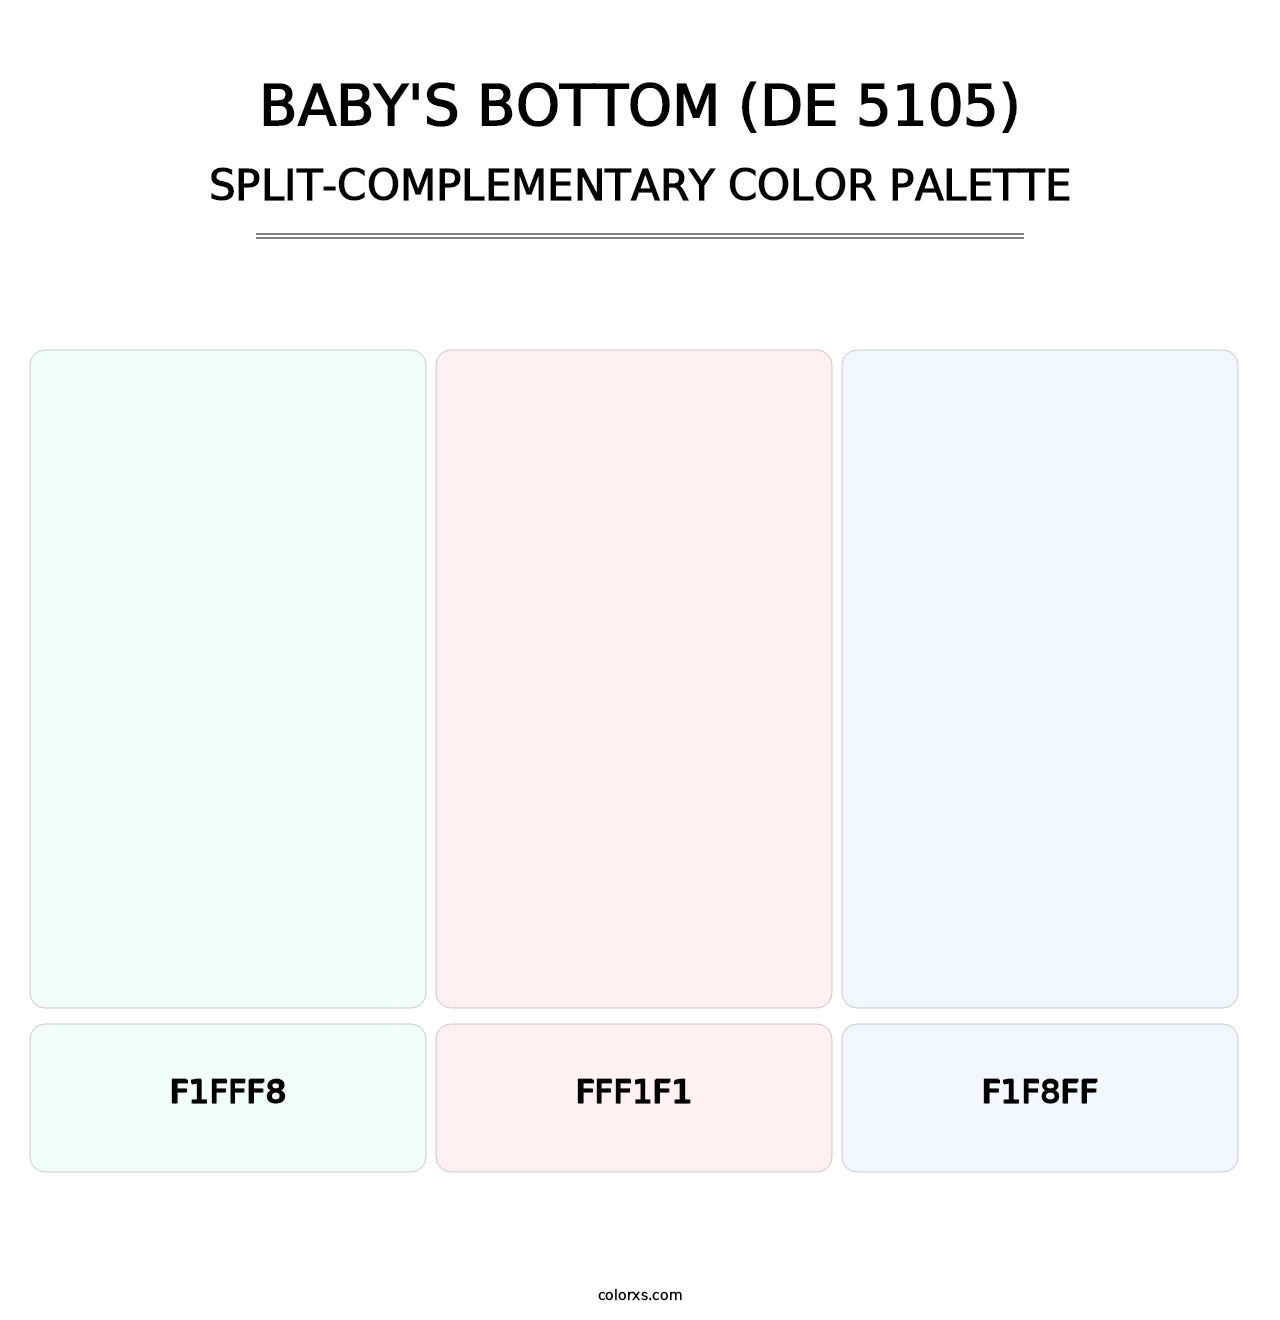 Baby's Bottom (DE 5105) - Split-Complementary Color Palette